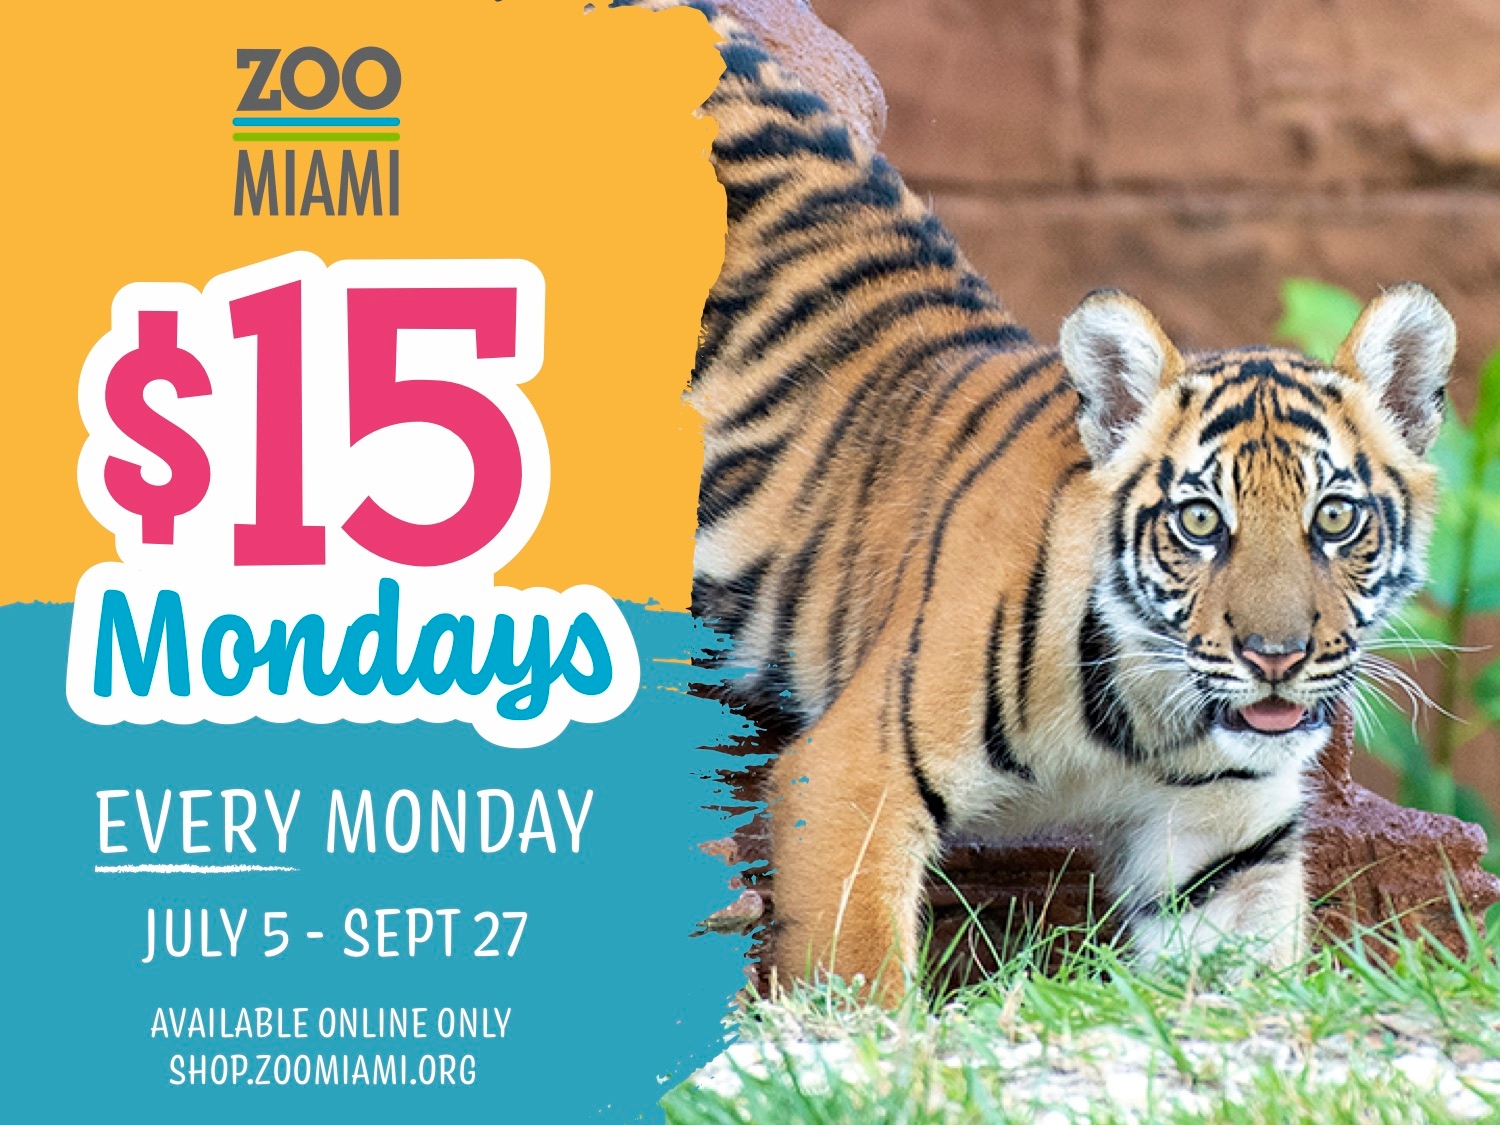 Miami Family Club - Summer special Miami Zoo